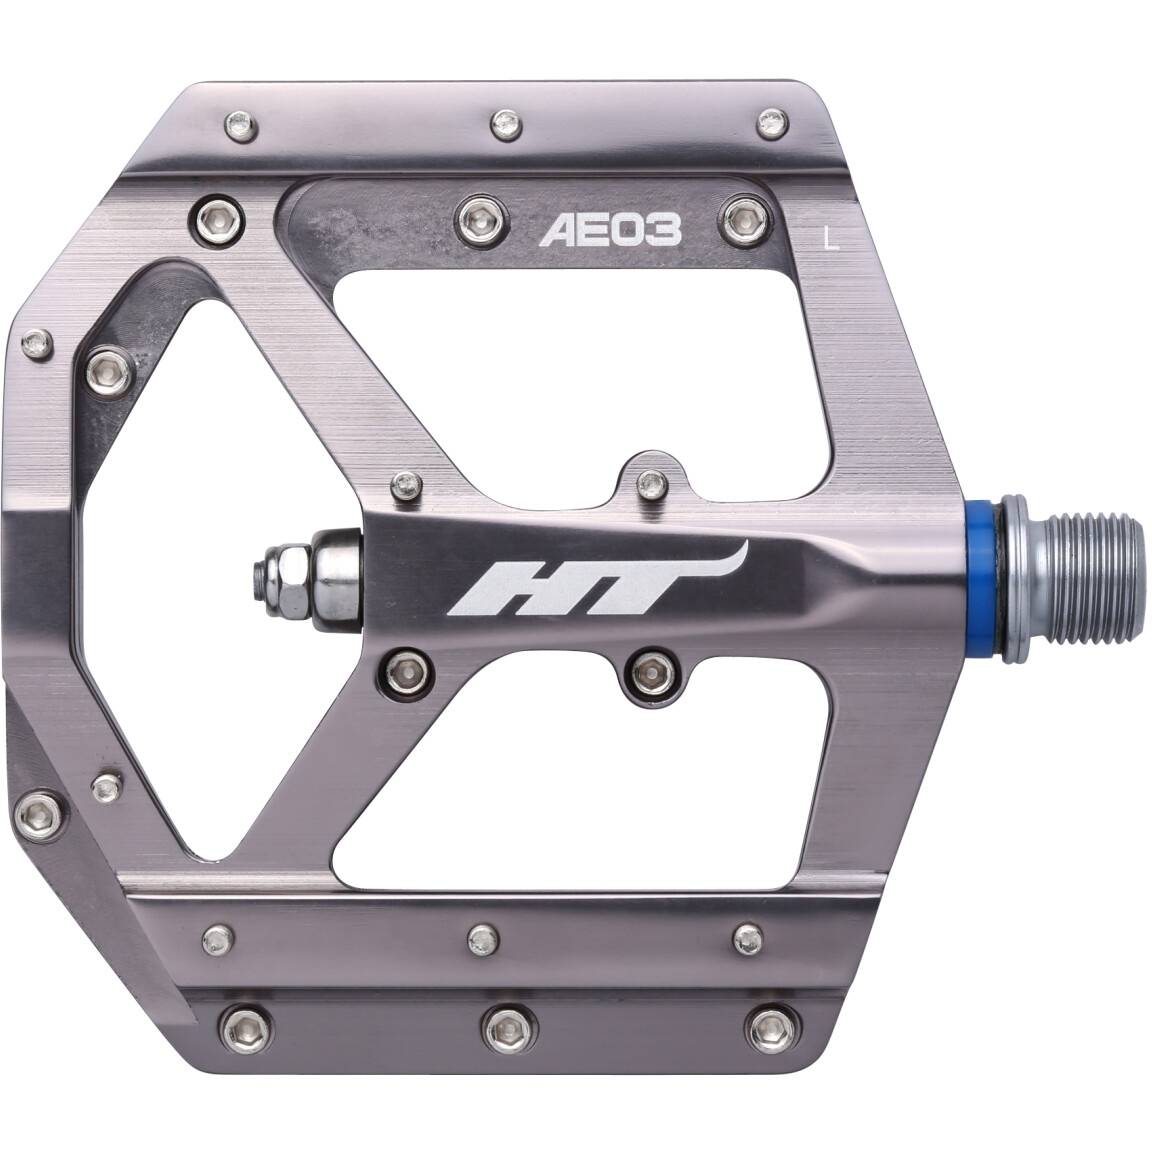 Productfoto van HT AE03 EVO+ Platformpedalen Aluminium - grey